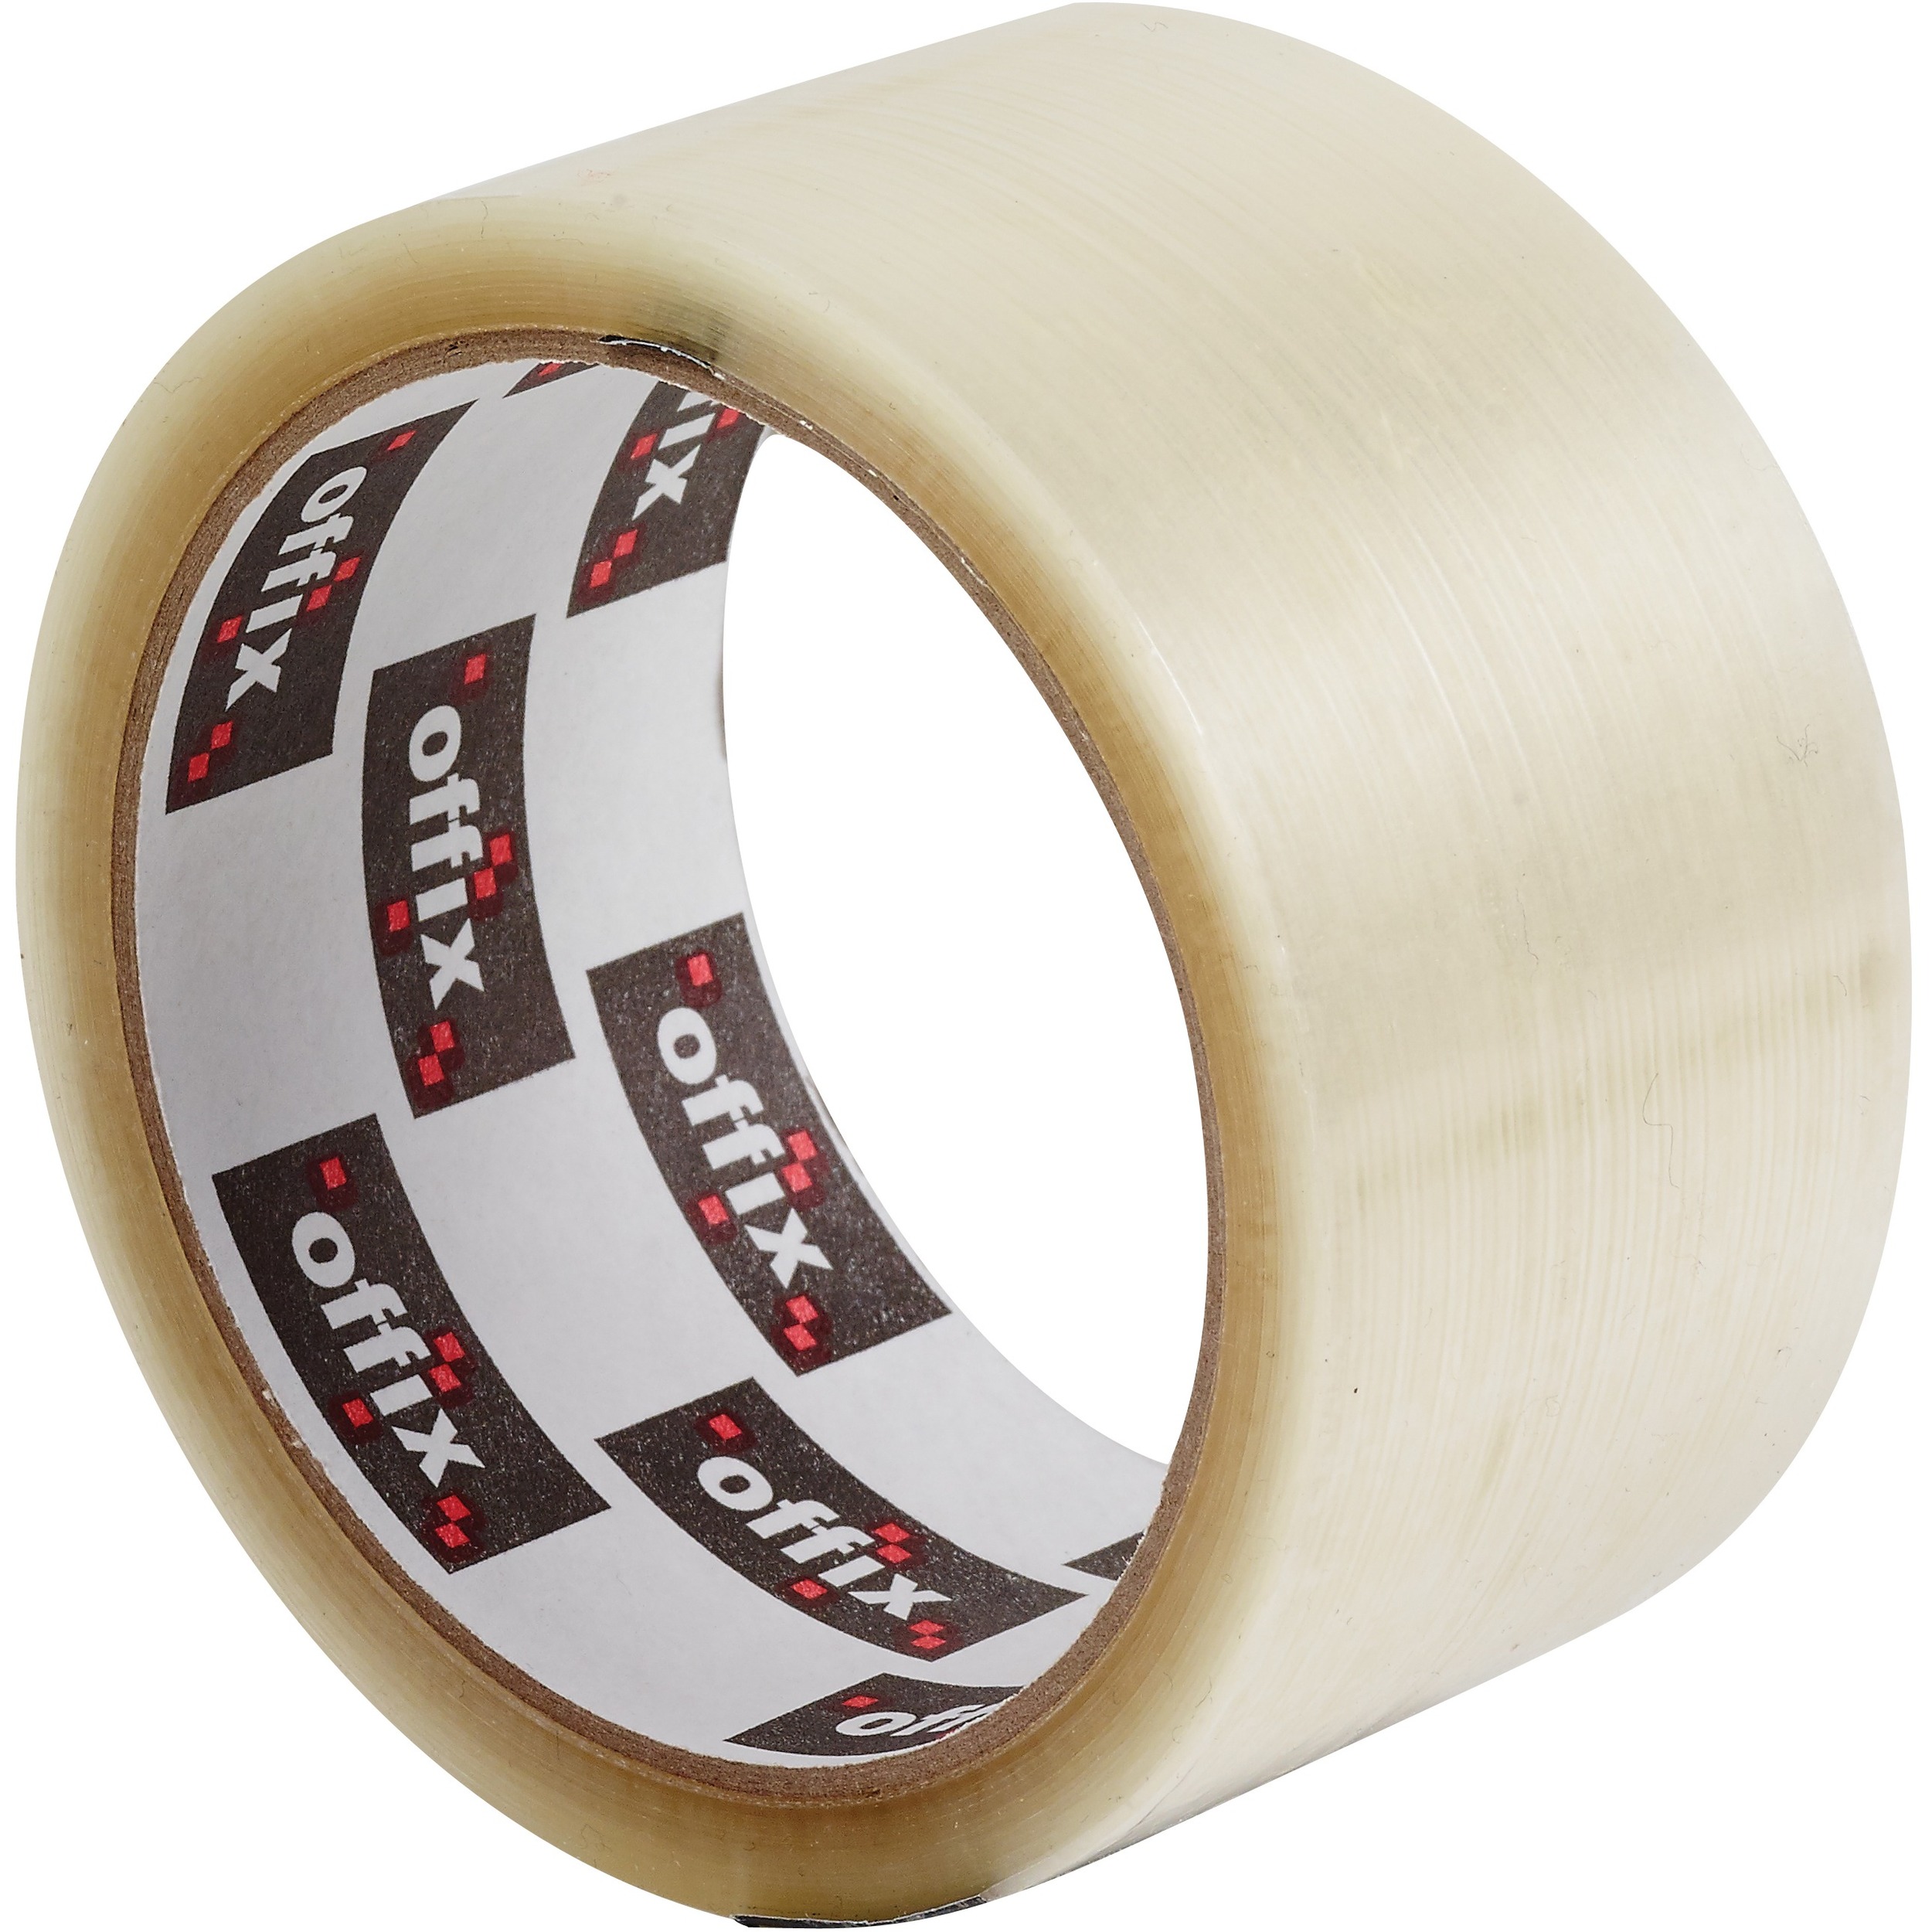 Offix Packaging Tape - 54.7 yd (50 m) Length x 2" (50.8 mm) Width - 6 / Pack